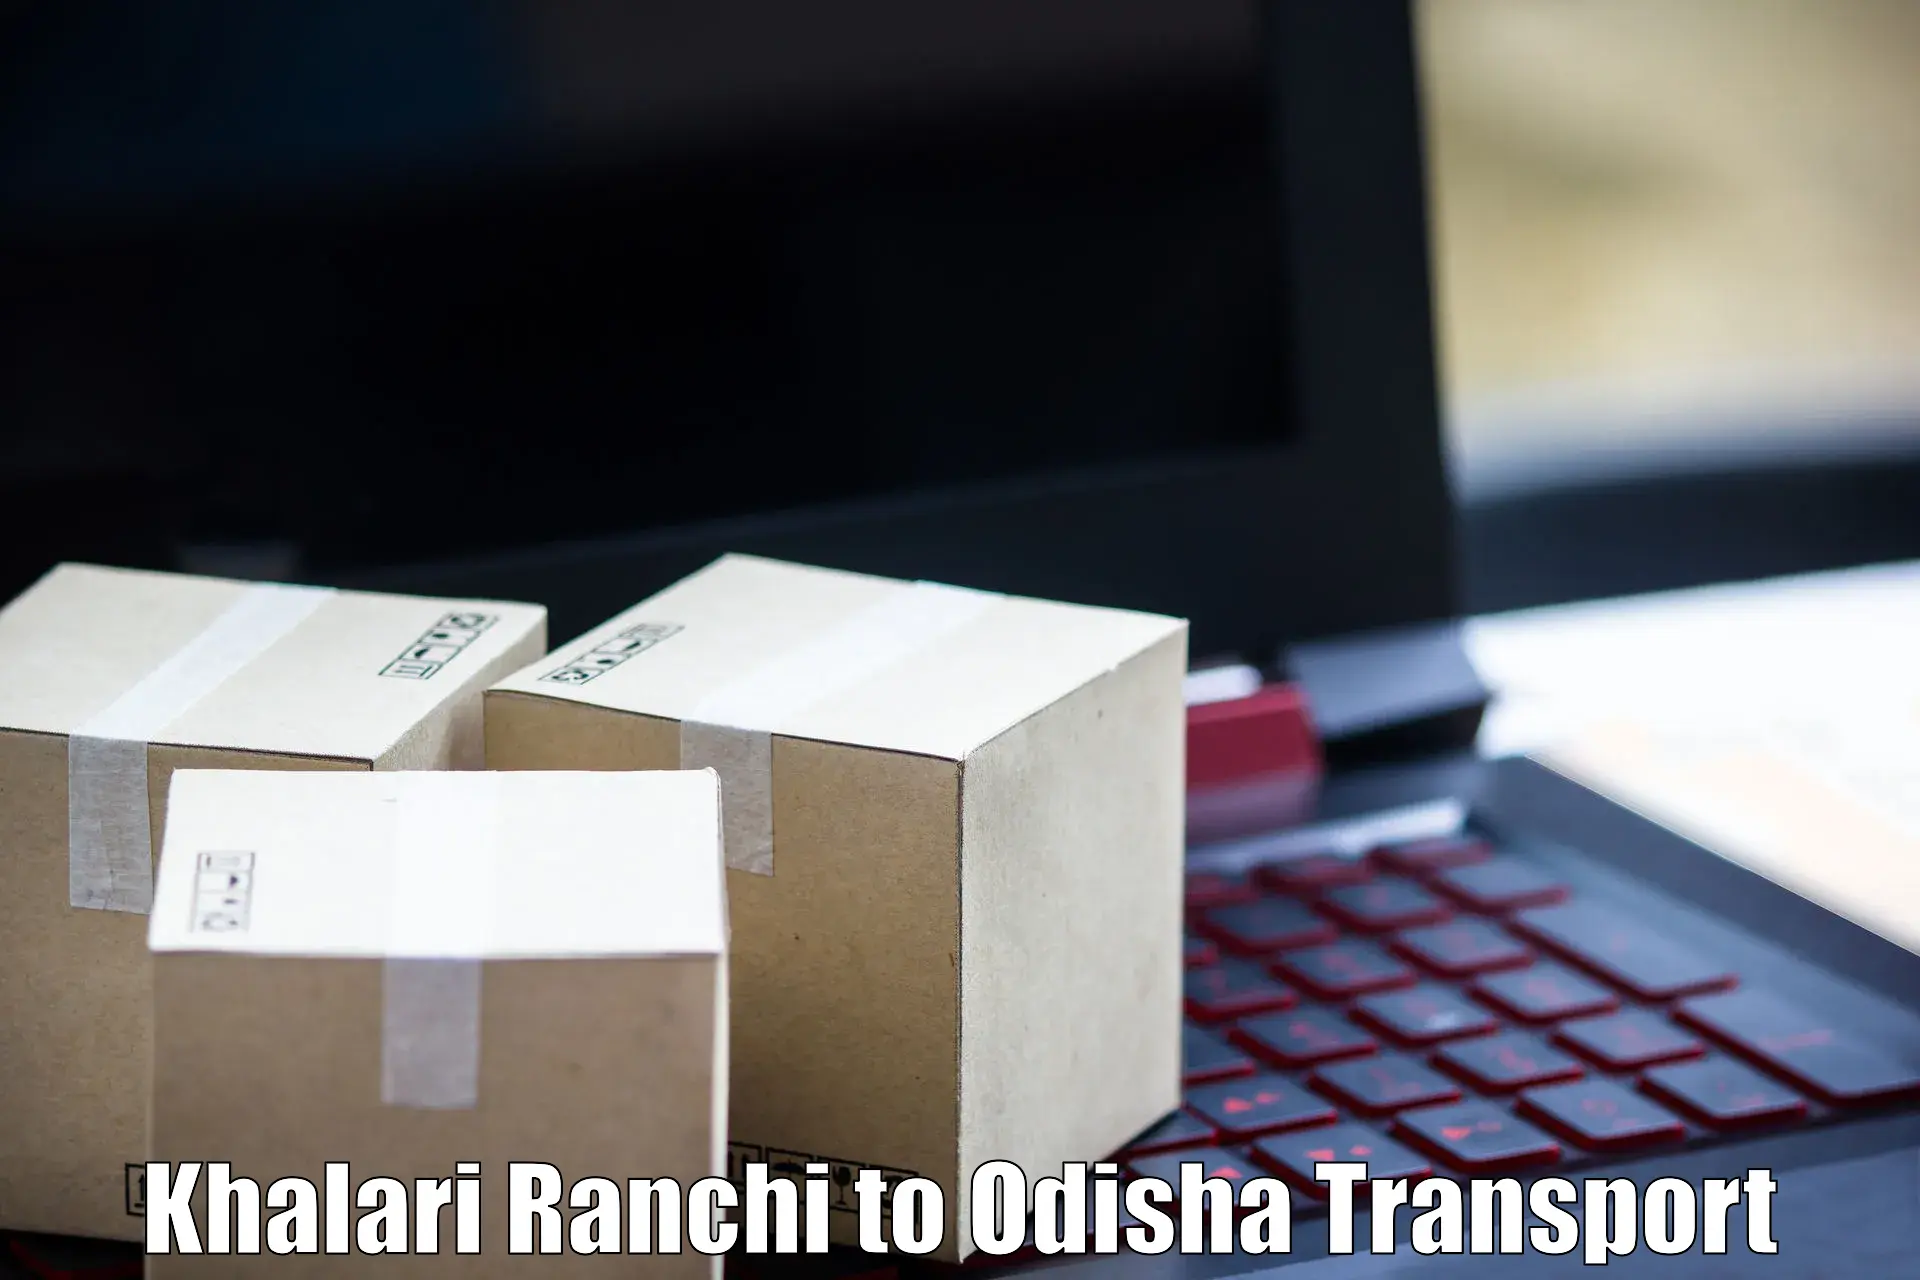 Furniture transport service Khalari Ranchi to Barkote